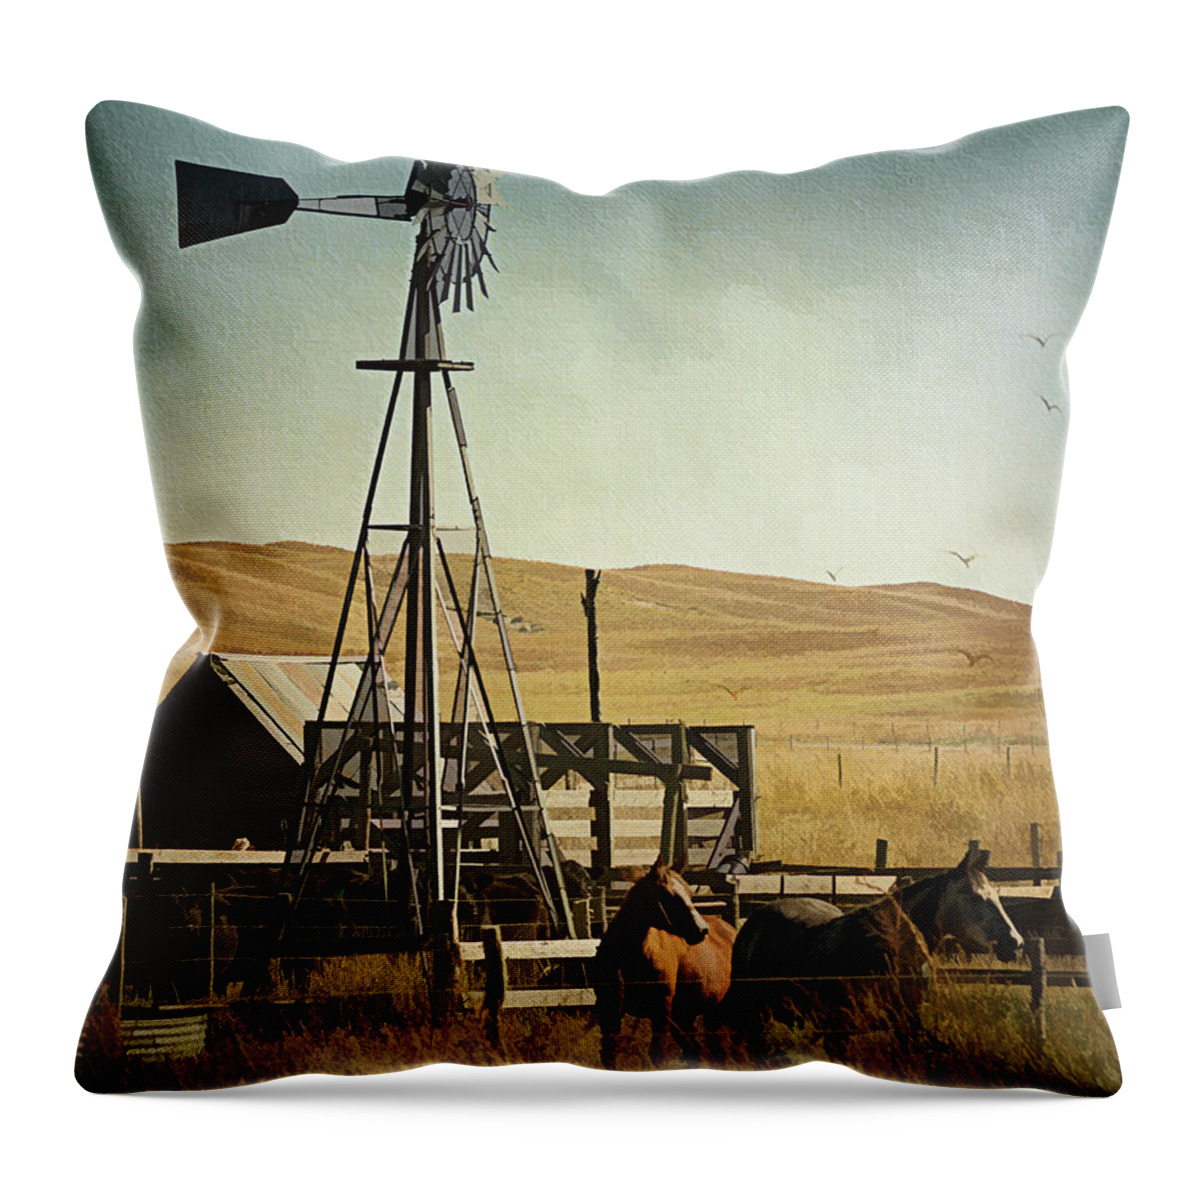 Farm Throw Pillow featuring the photograph A Beautiful Nebraska Sandhills Farm by Priscilla Burgers